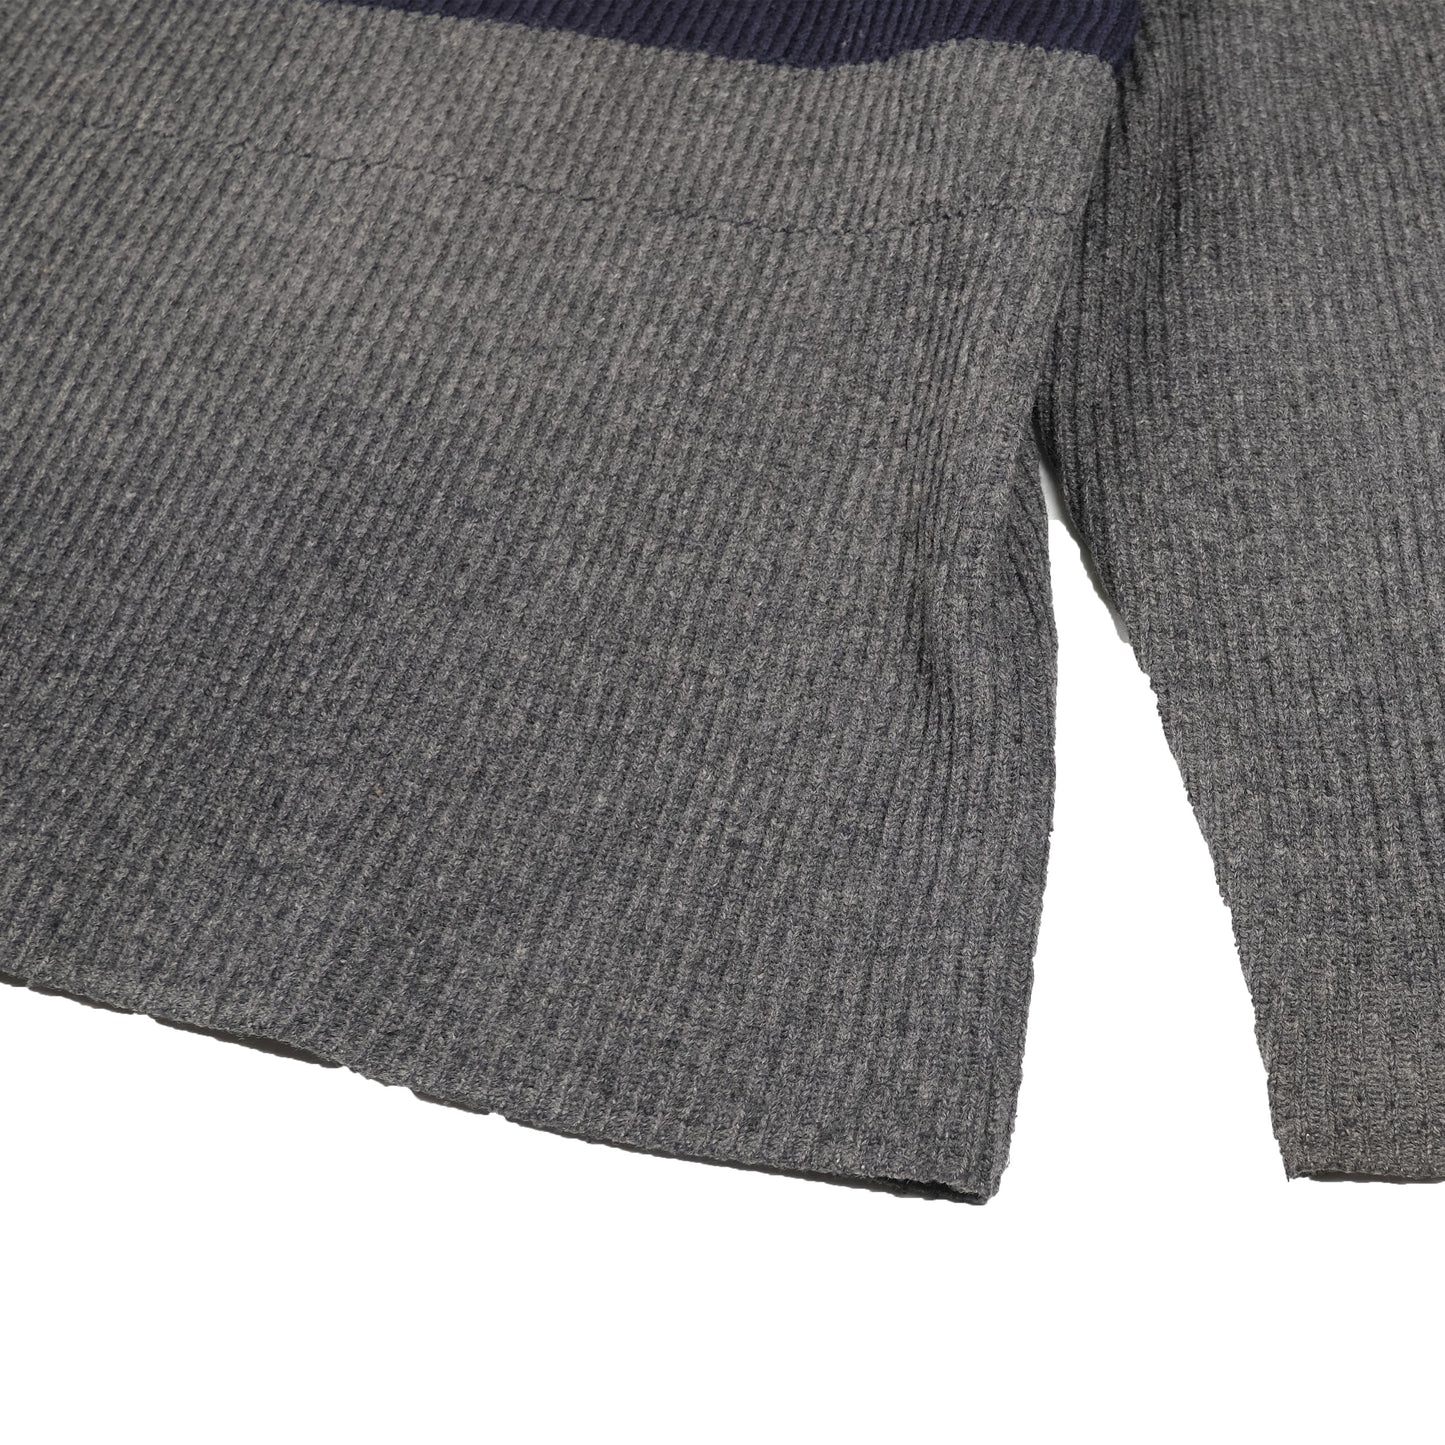 Y's For Men Grey Mock Neck Sweater - Navy Stripe